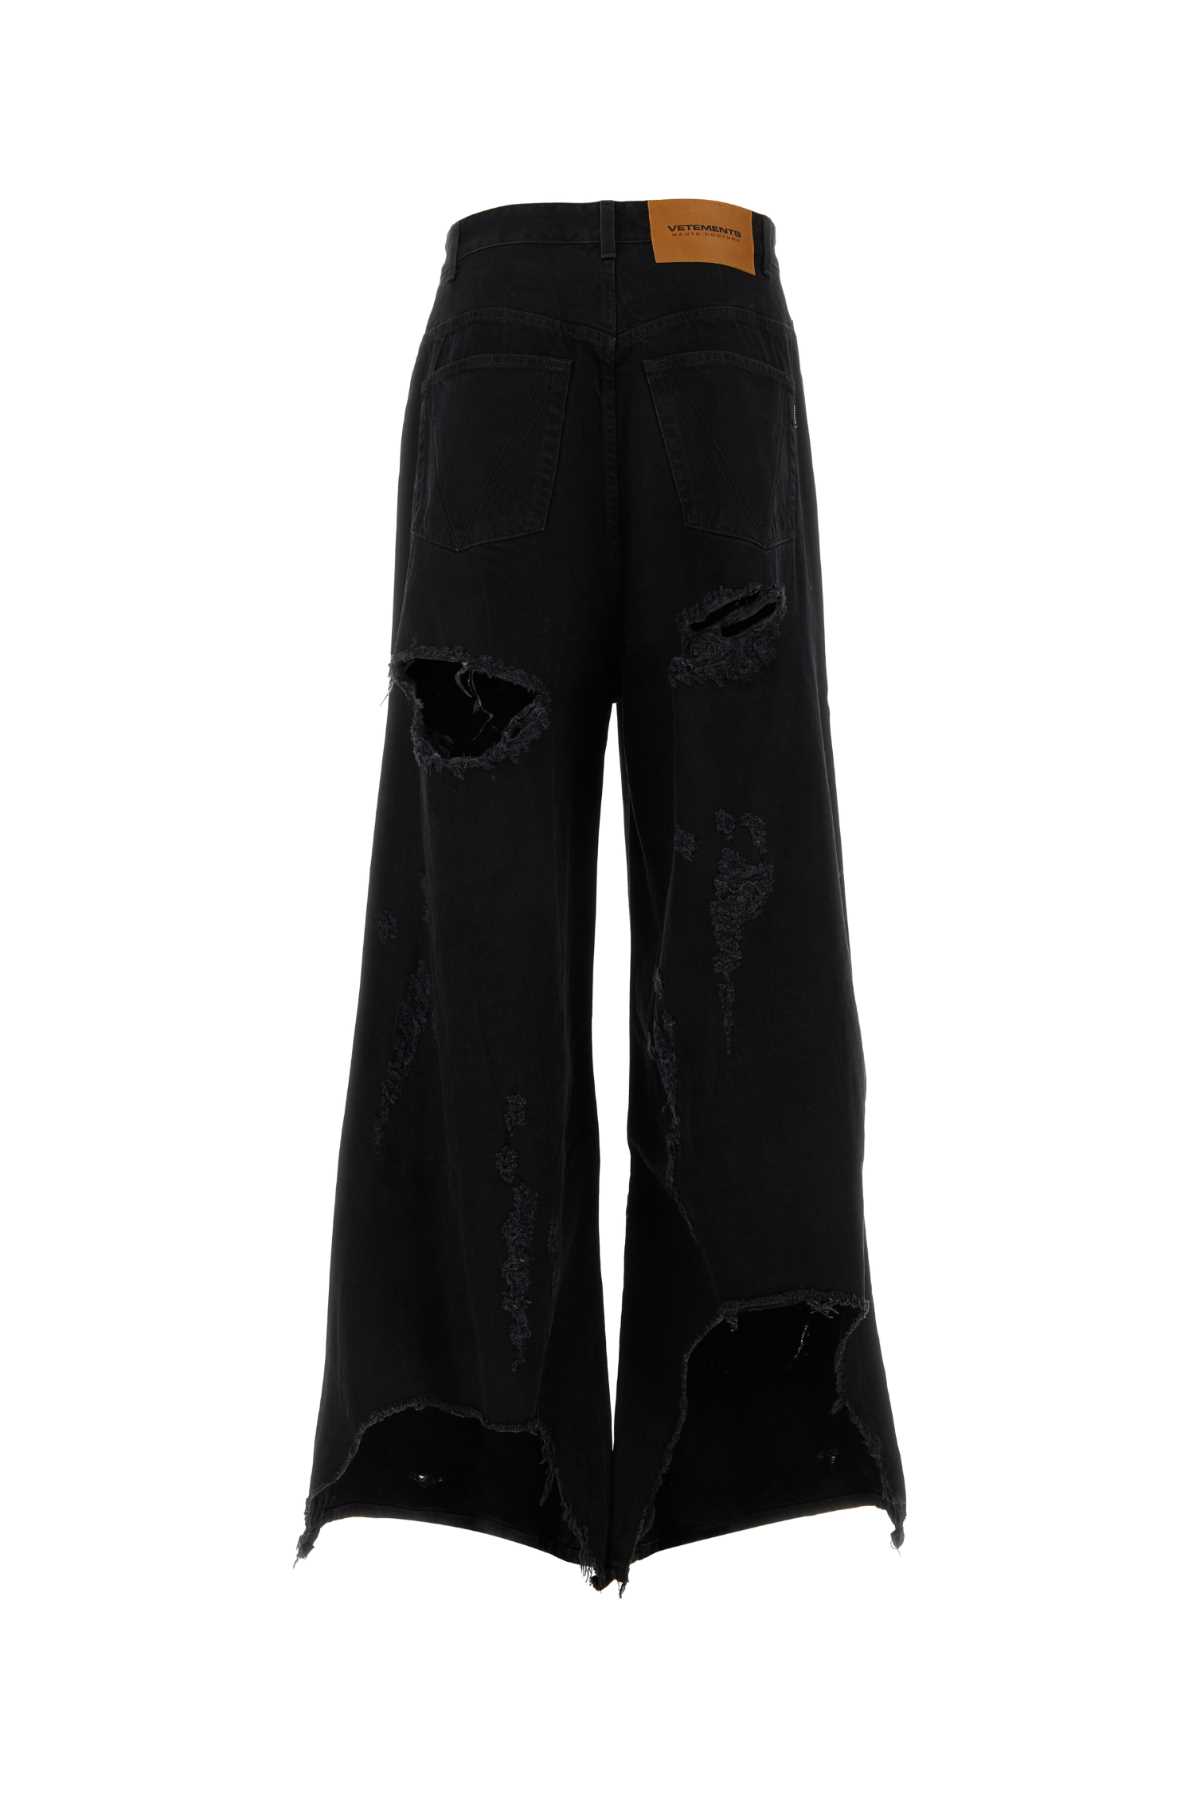 Vetements Black Denim Baggy Jeans